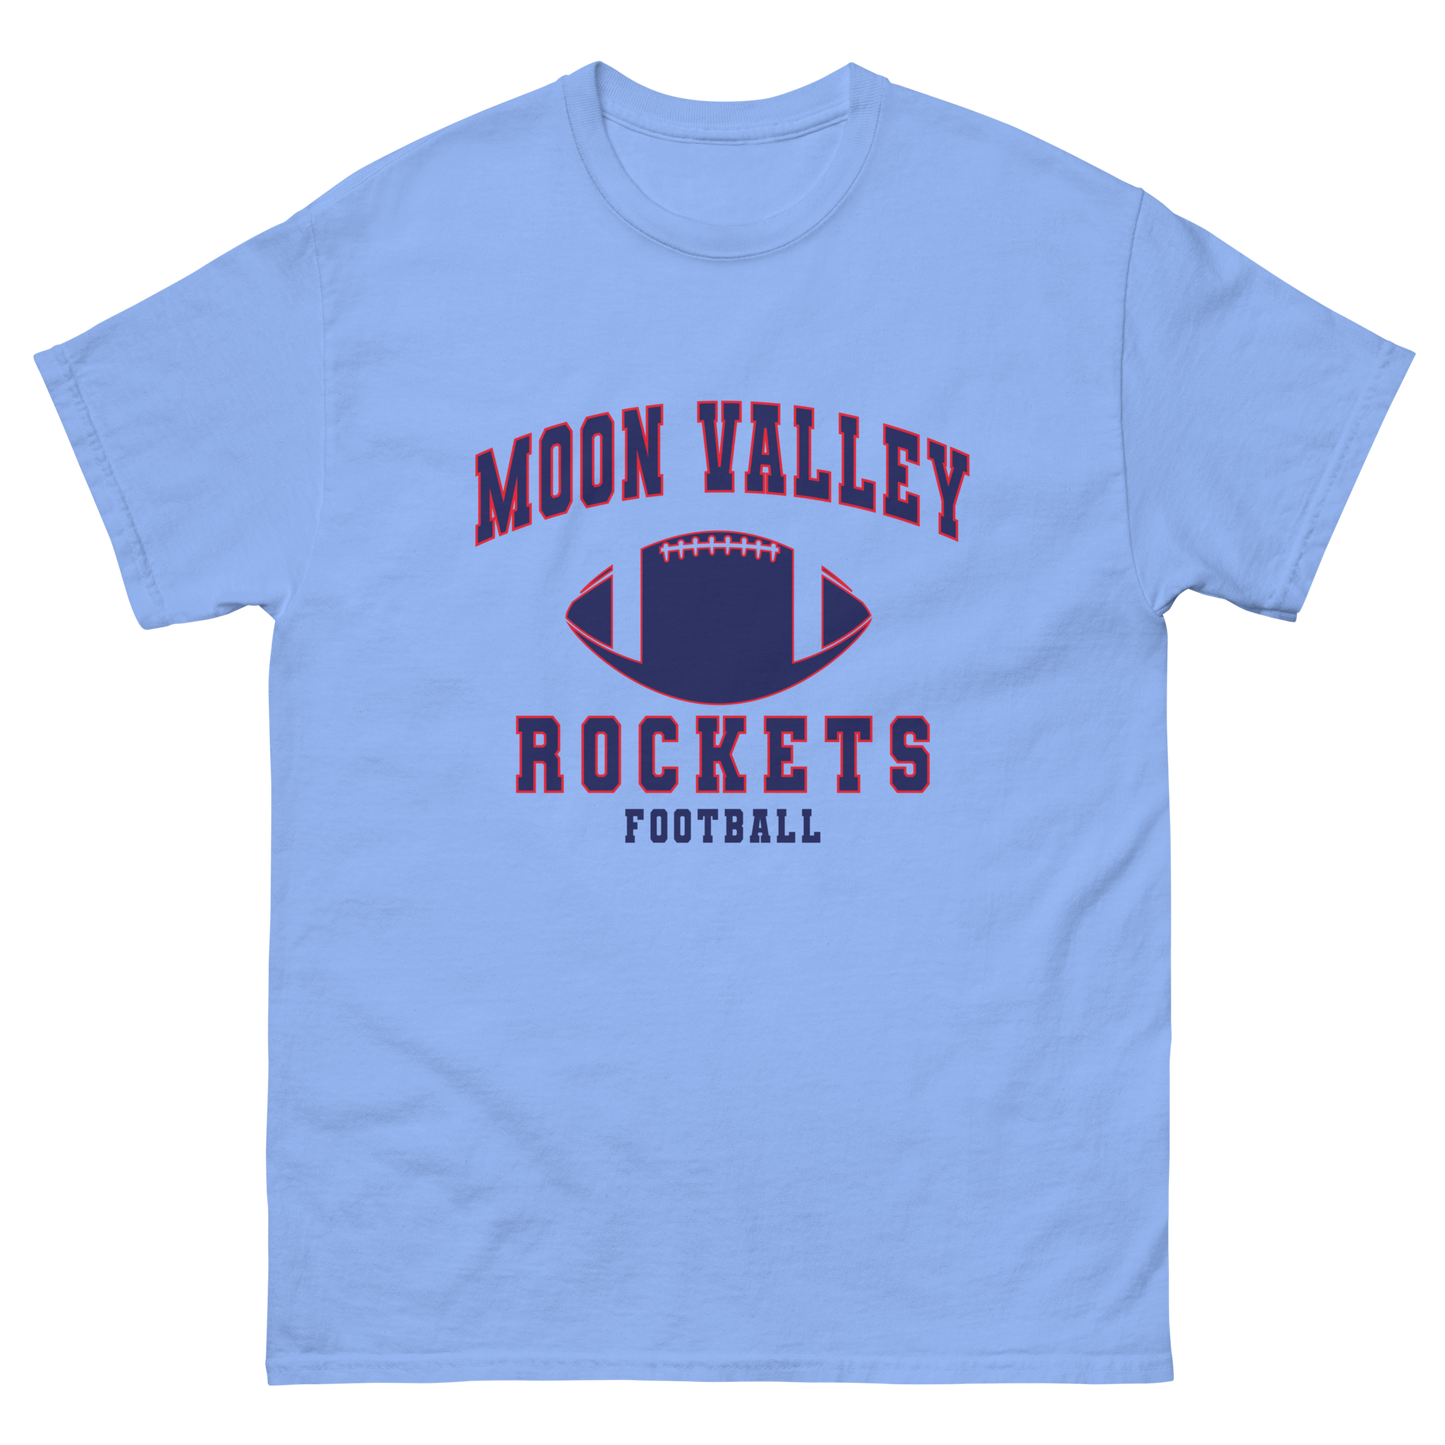 Moon valley Football Men's classic tee